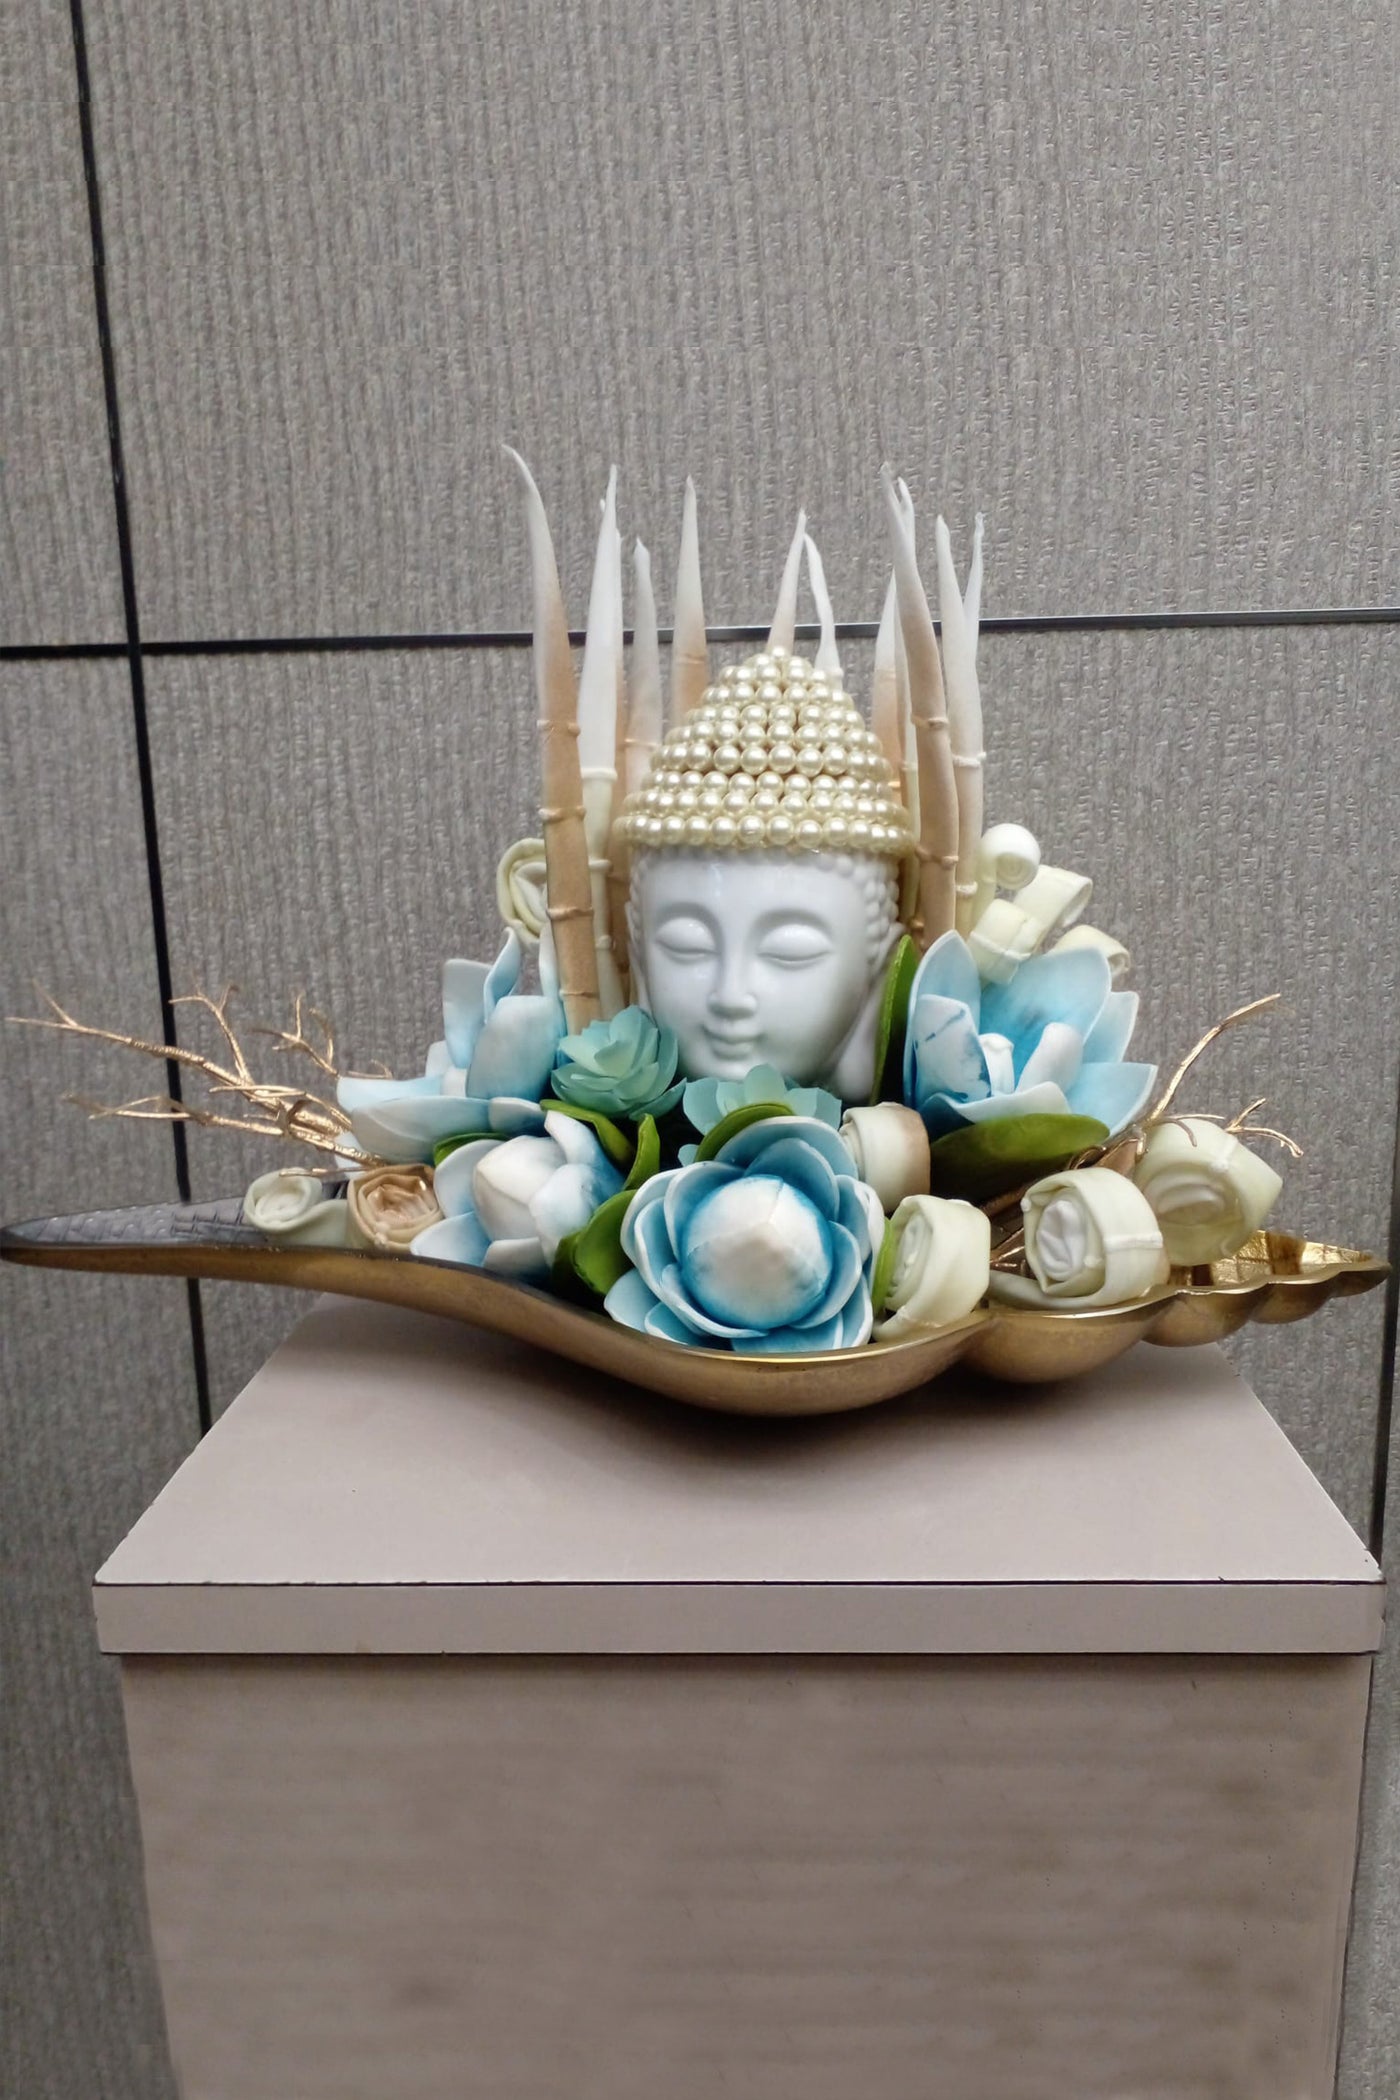 Stunning Ceramic Buddha in a Blue Floral arrangement.